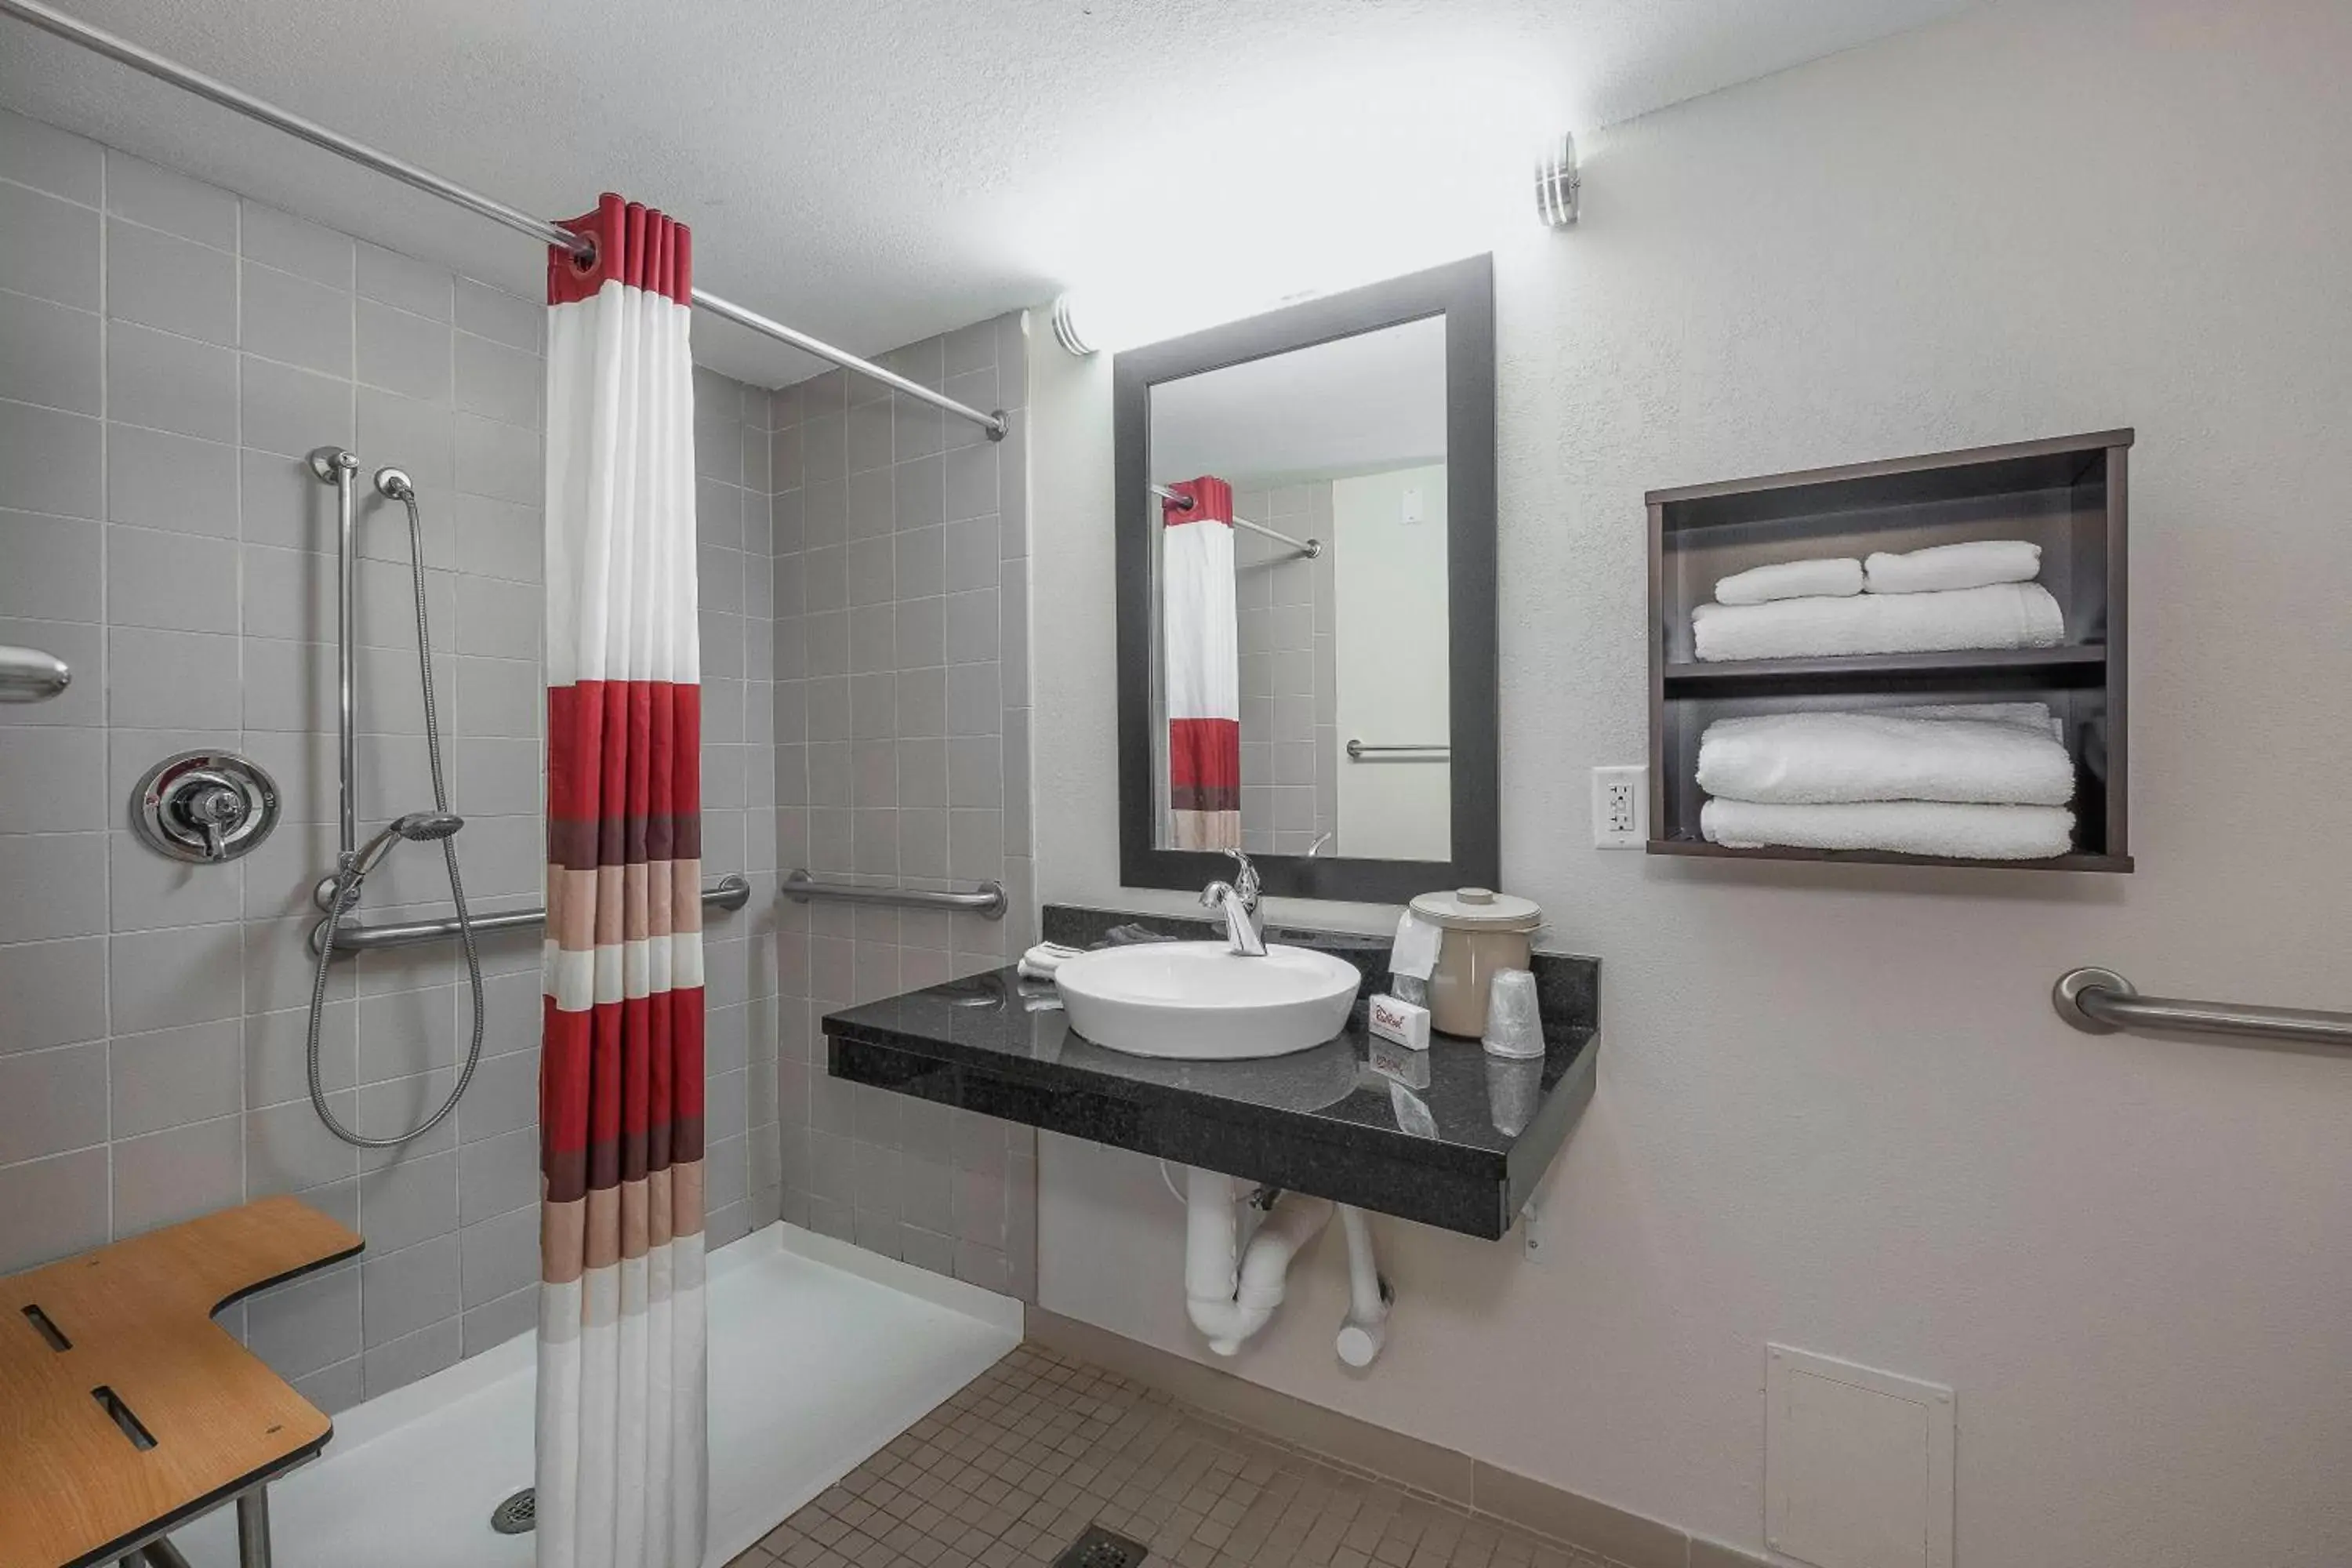 Bathroom in Red Roof Inn Roanoke Rapids